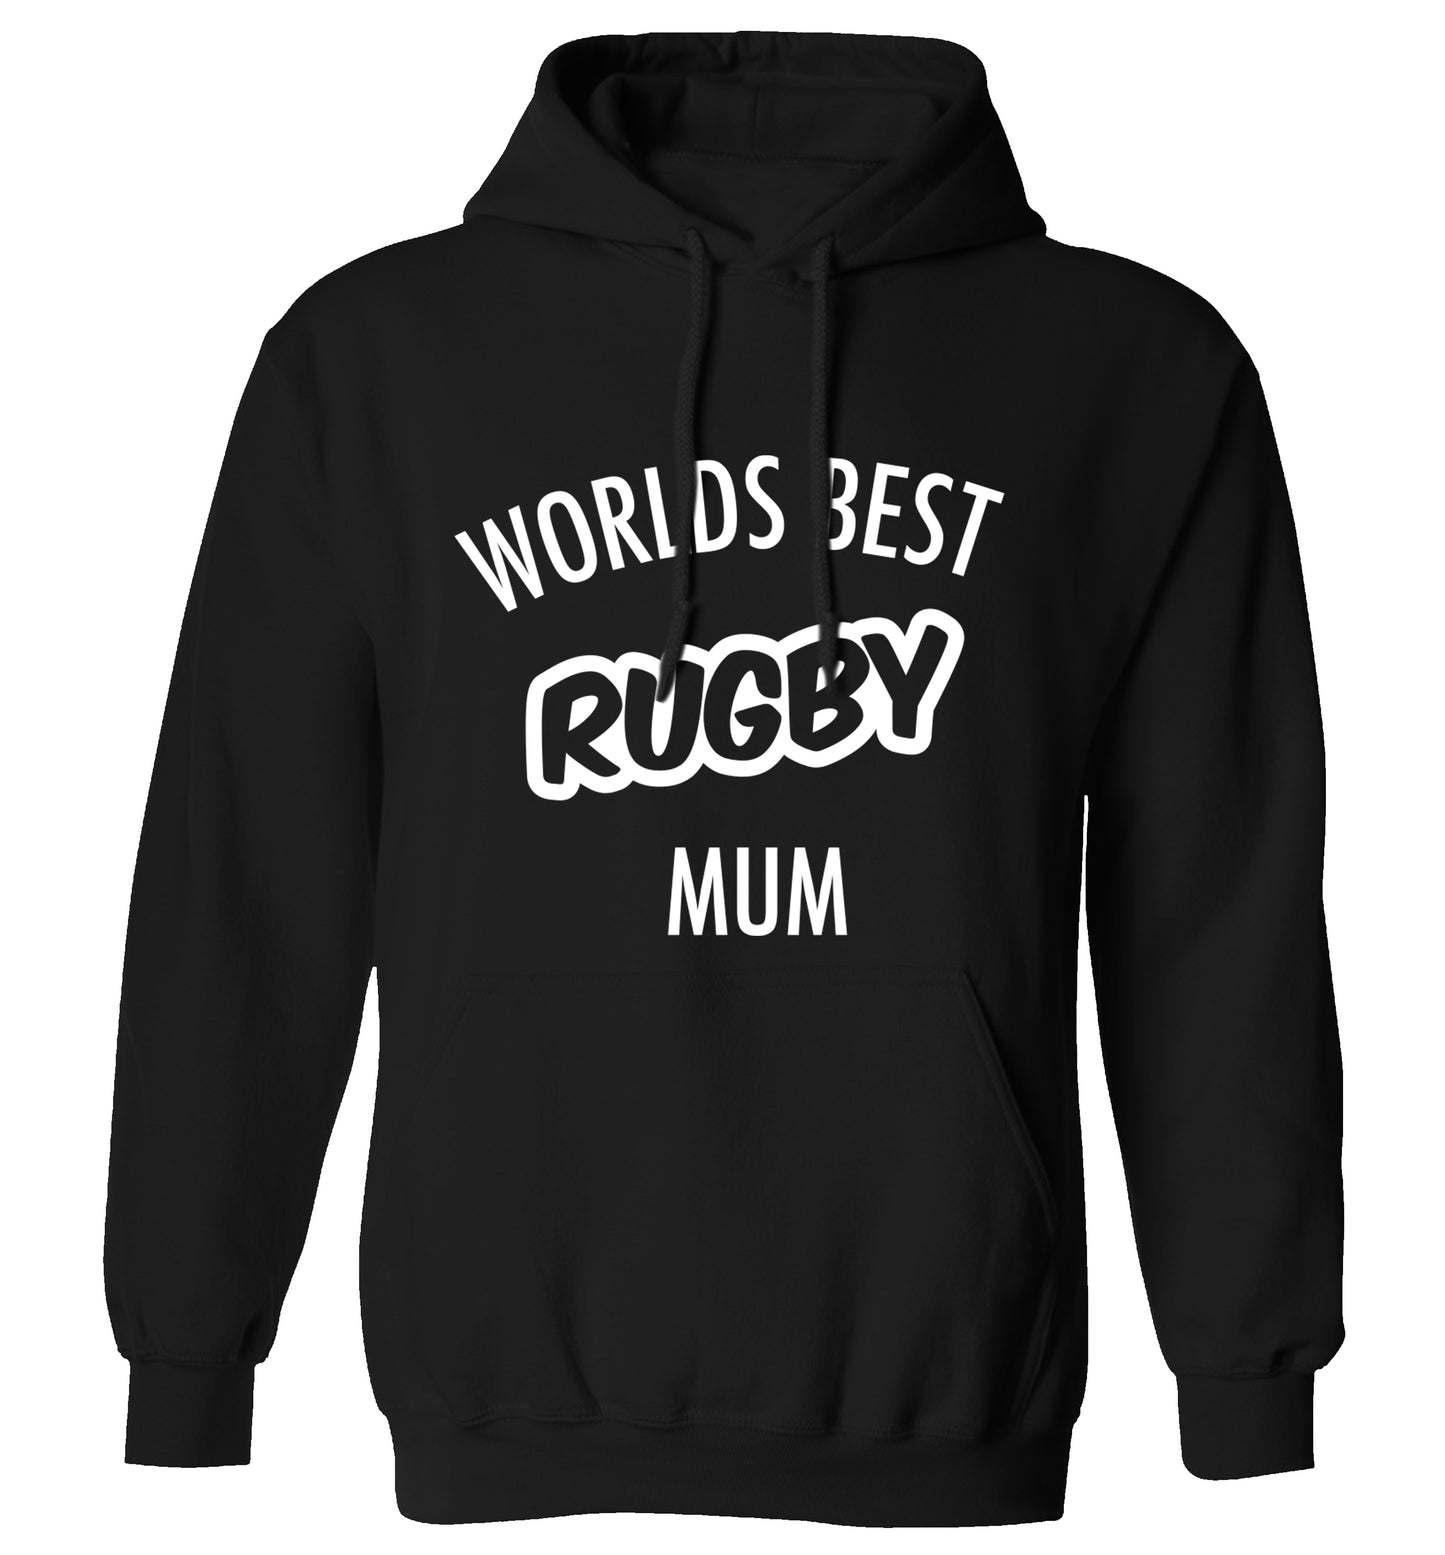 Worlds best rugby mum adults unisex black hoodie 2XL